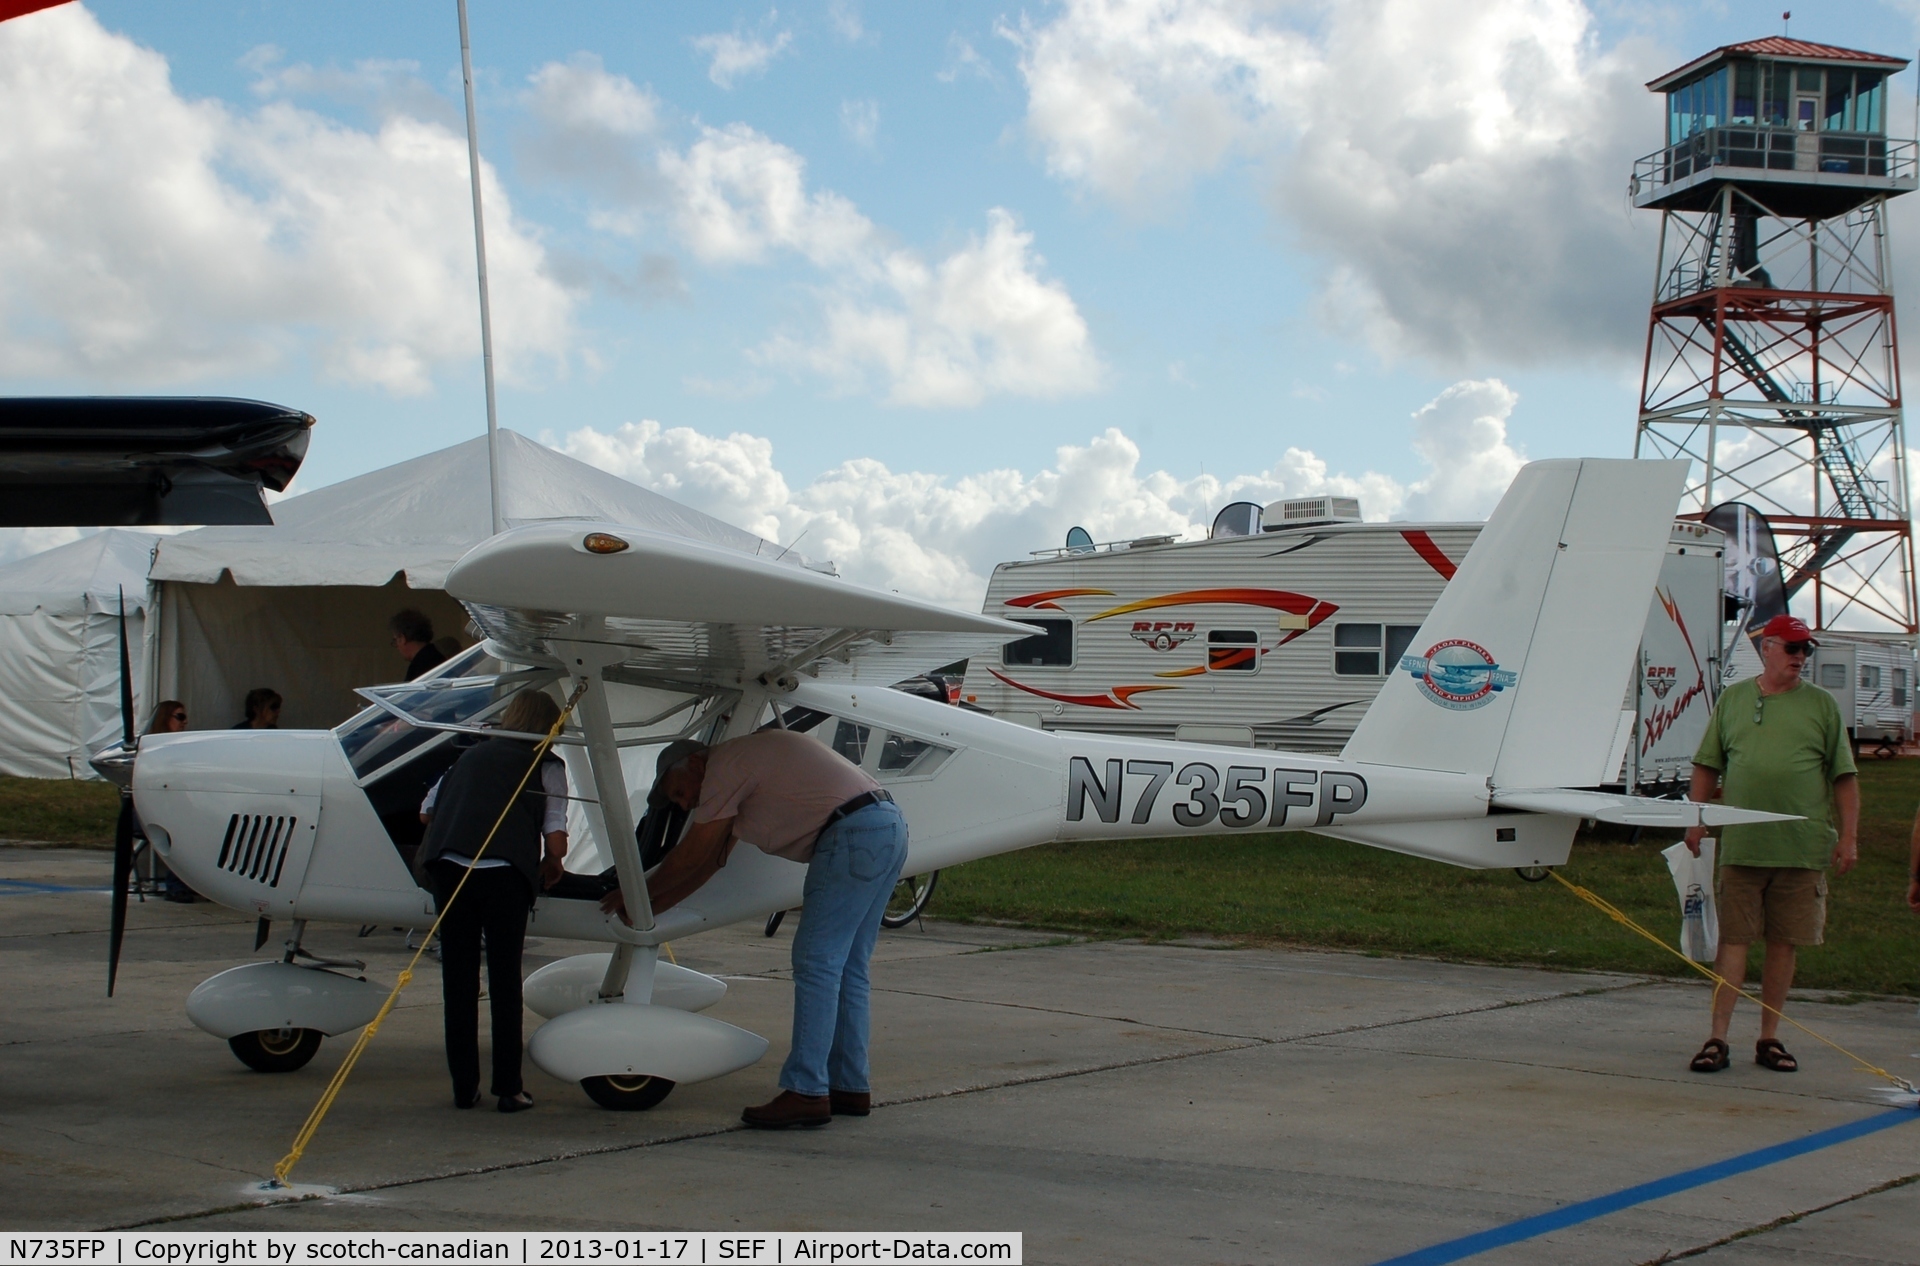 N735FP, Aeroprakt A-22 Valor C/N 289, FPNA Llc A-22 VALOR, N735FP, at the US Sport Aviation Expo, Sebring Regional Airport, Sebring, FL